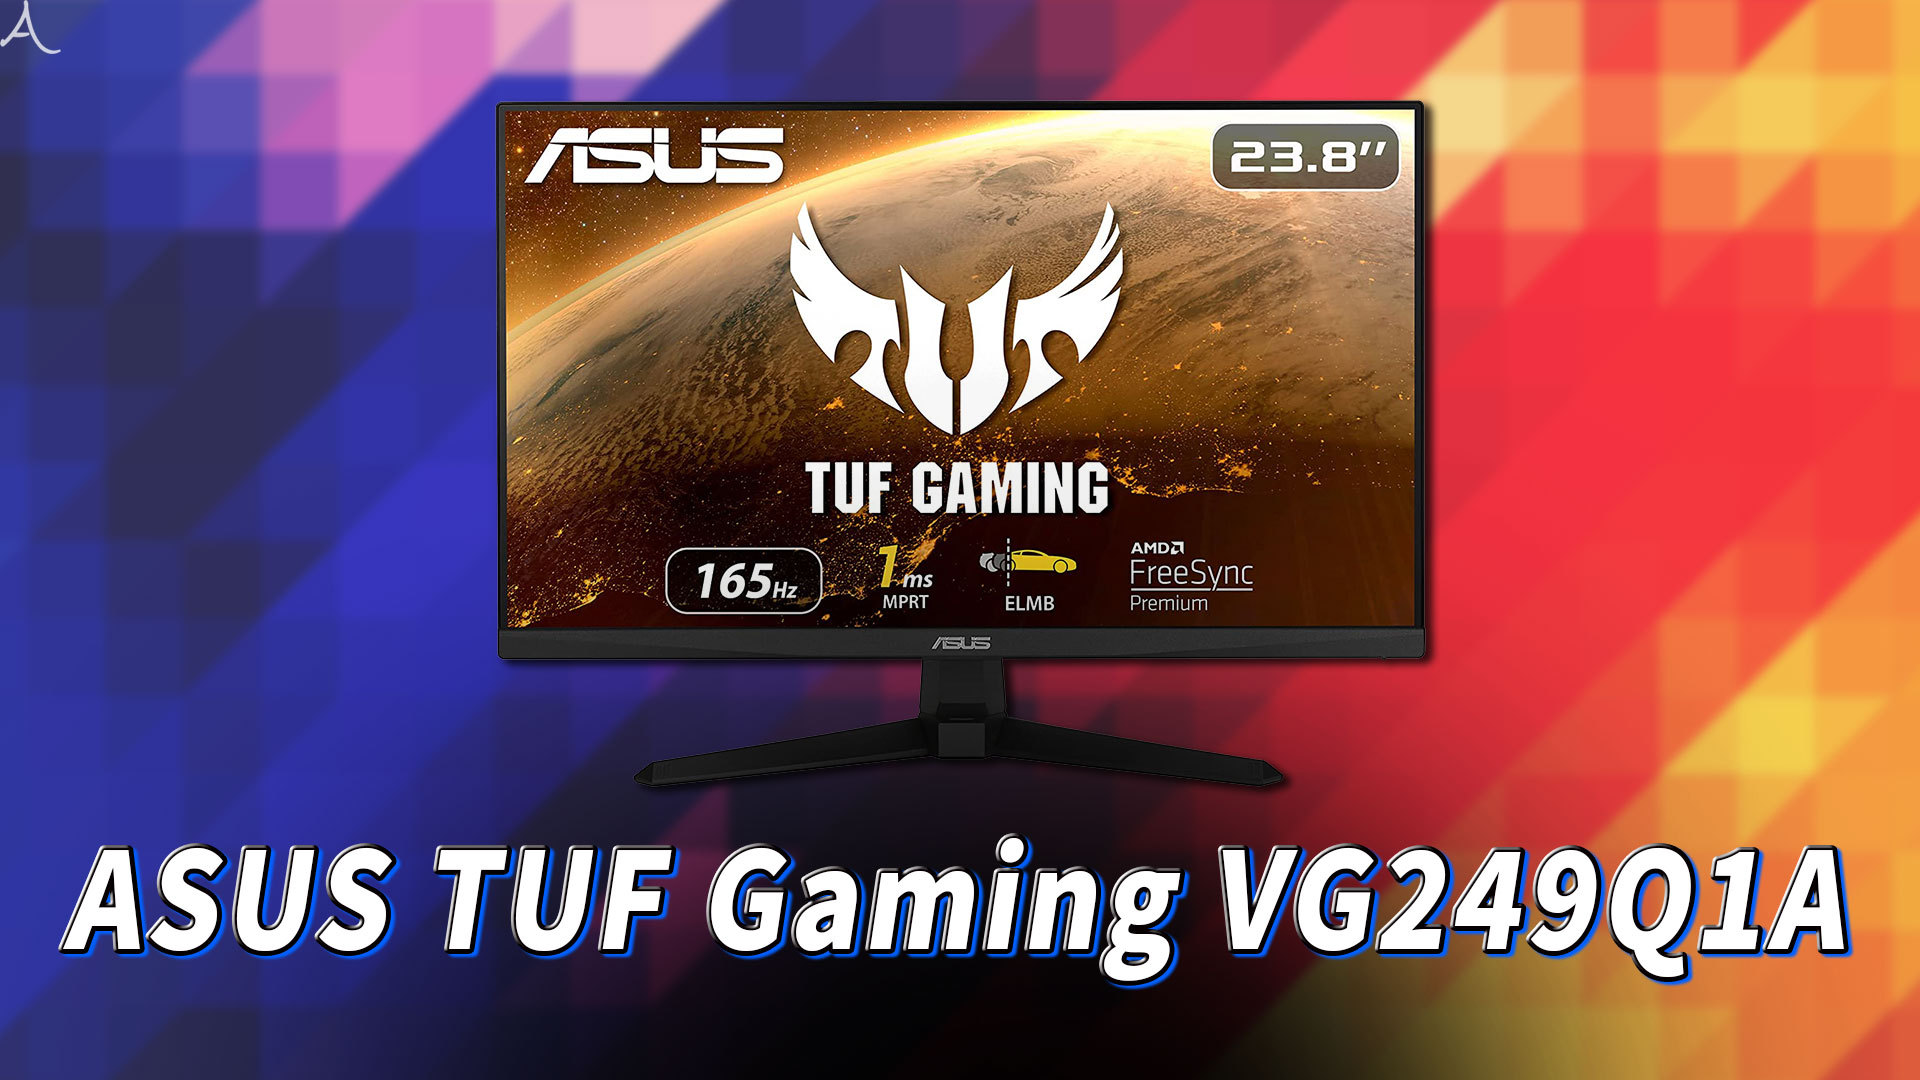 「ASUS TUF Gaming VG249Q1A」はスピーカーに対応してる？おすすめのPCスピーカーはどれ？